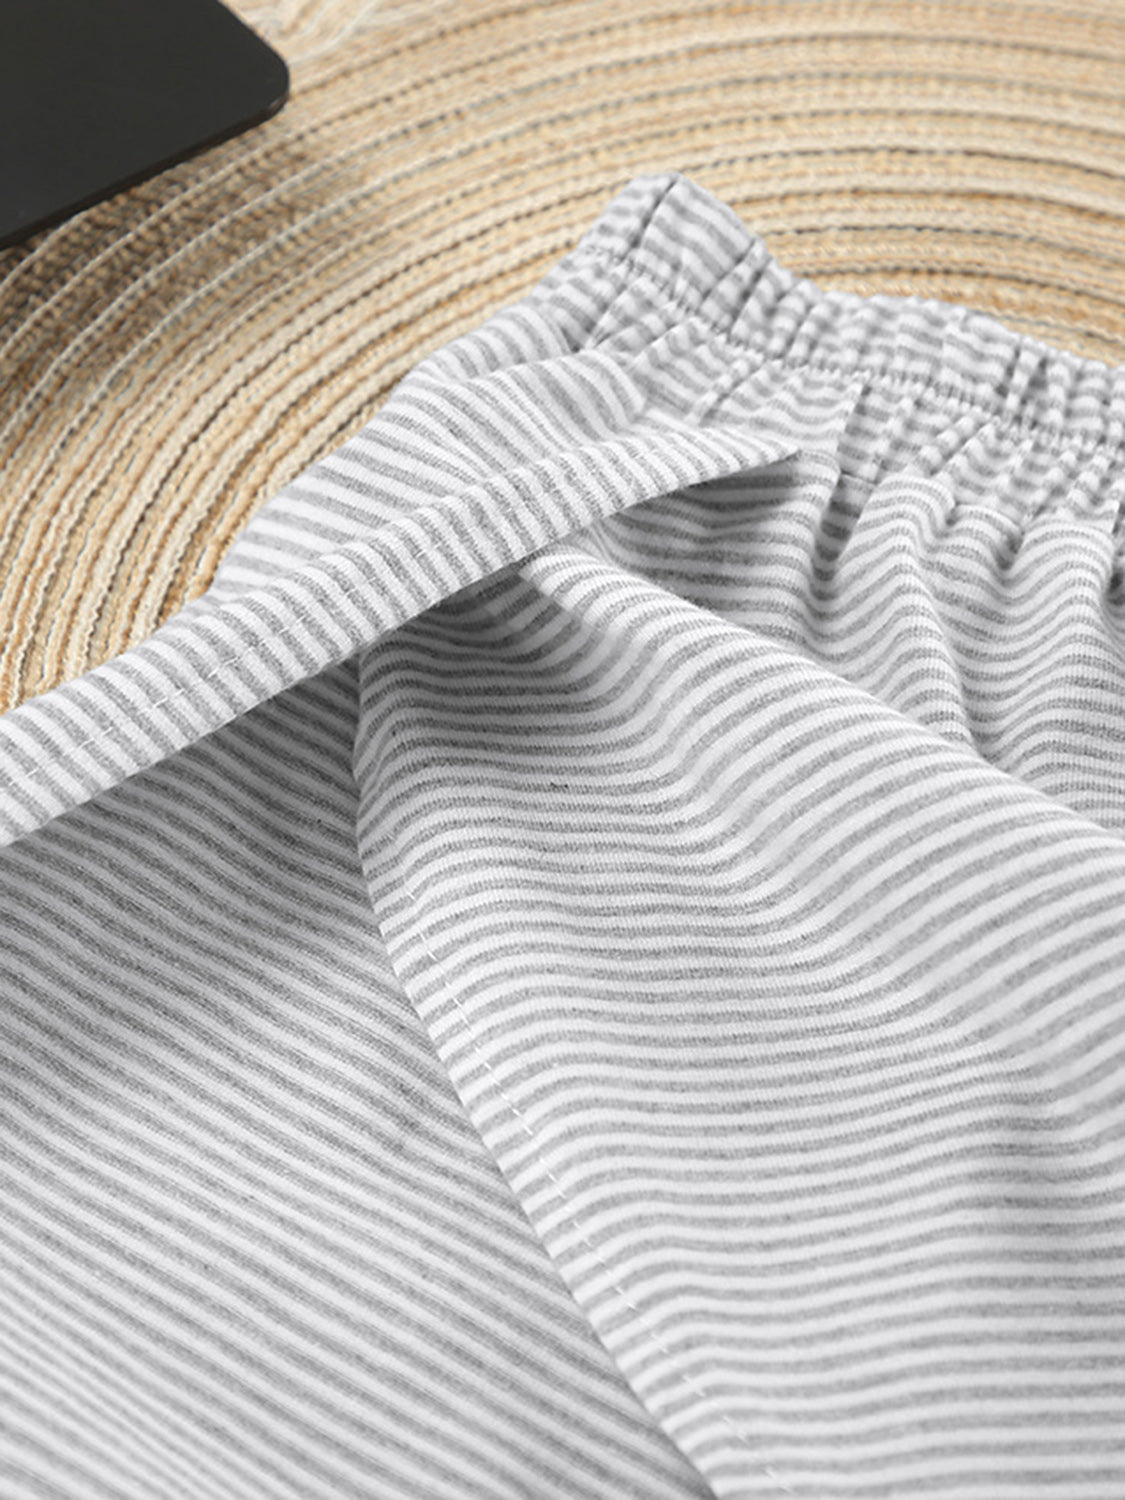 TEEK - Striped Round Neck Top and Shorts Set SET TEEK Trend   